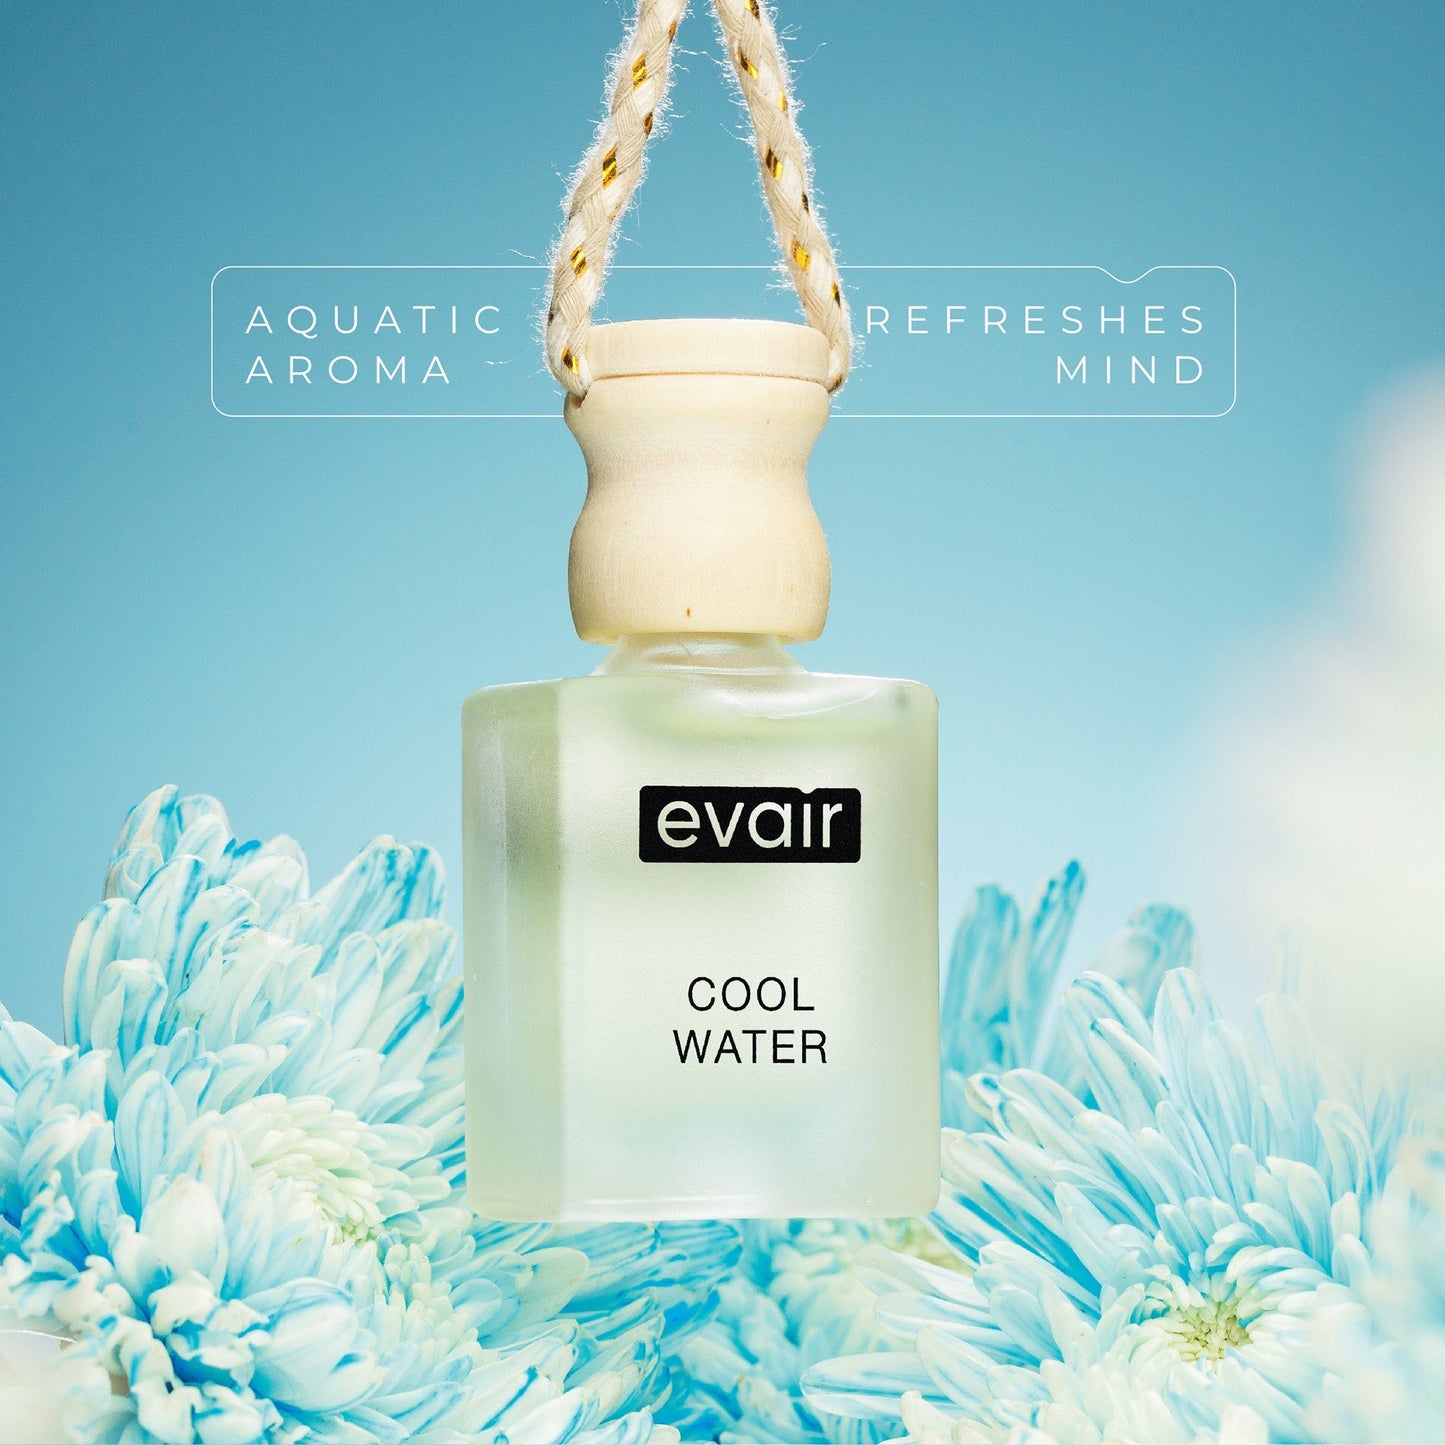 Evair Cool Water Car Perfume Glass Bottle wiith flowers